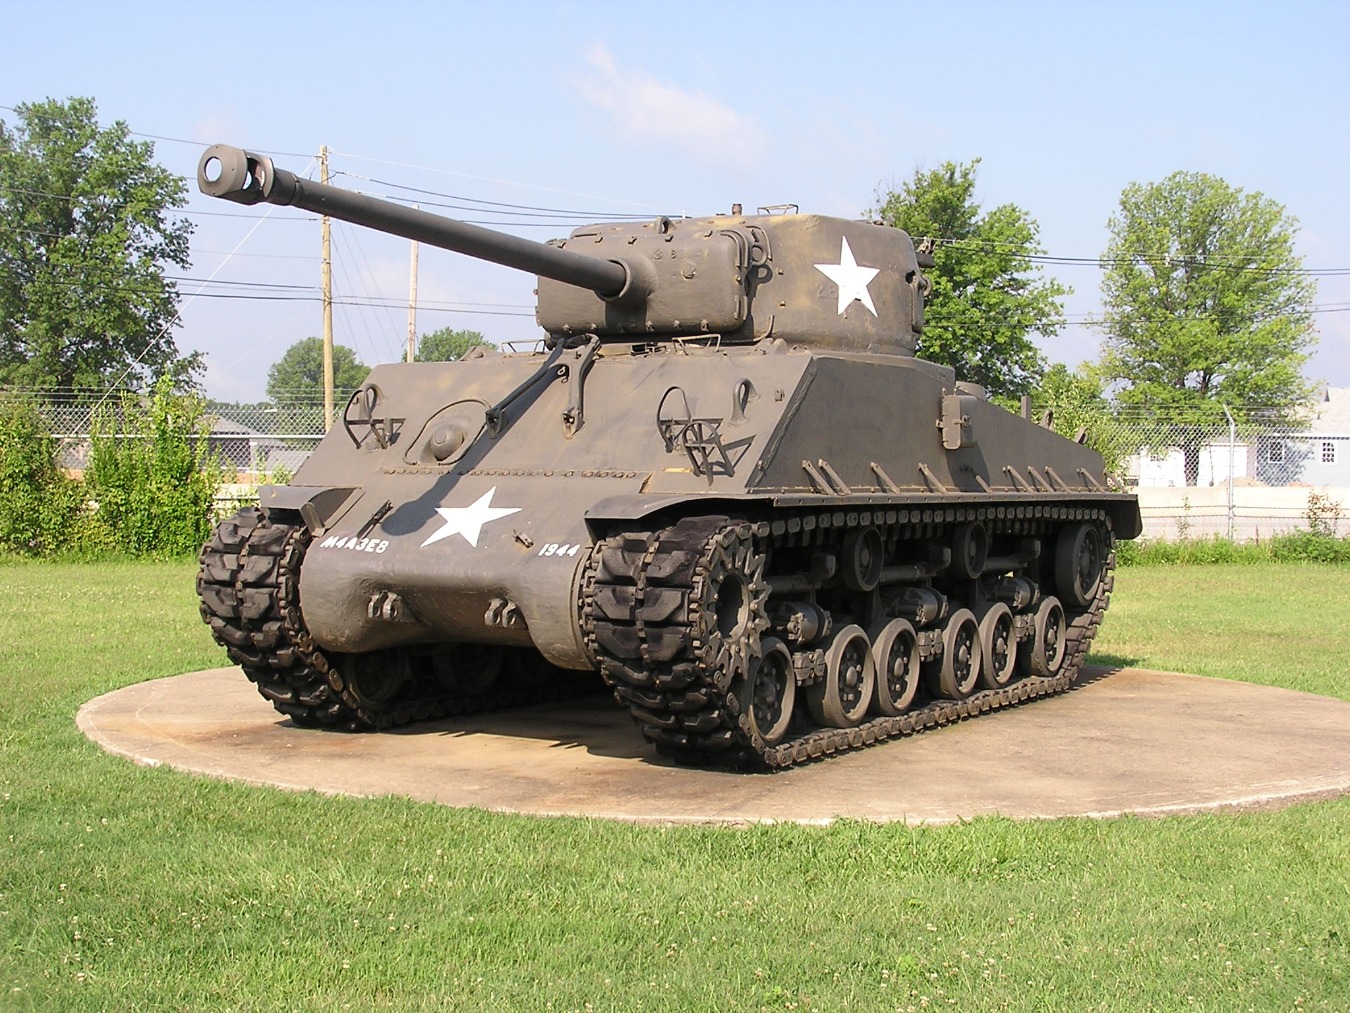 The Army S World War II Sherman Tank Wasn T Perfect But It Won World War II The National